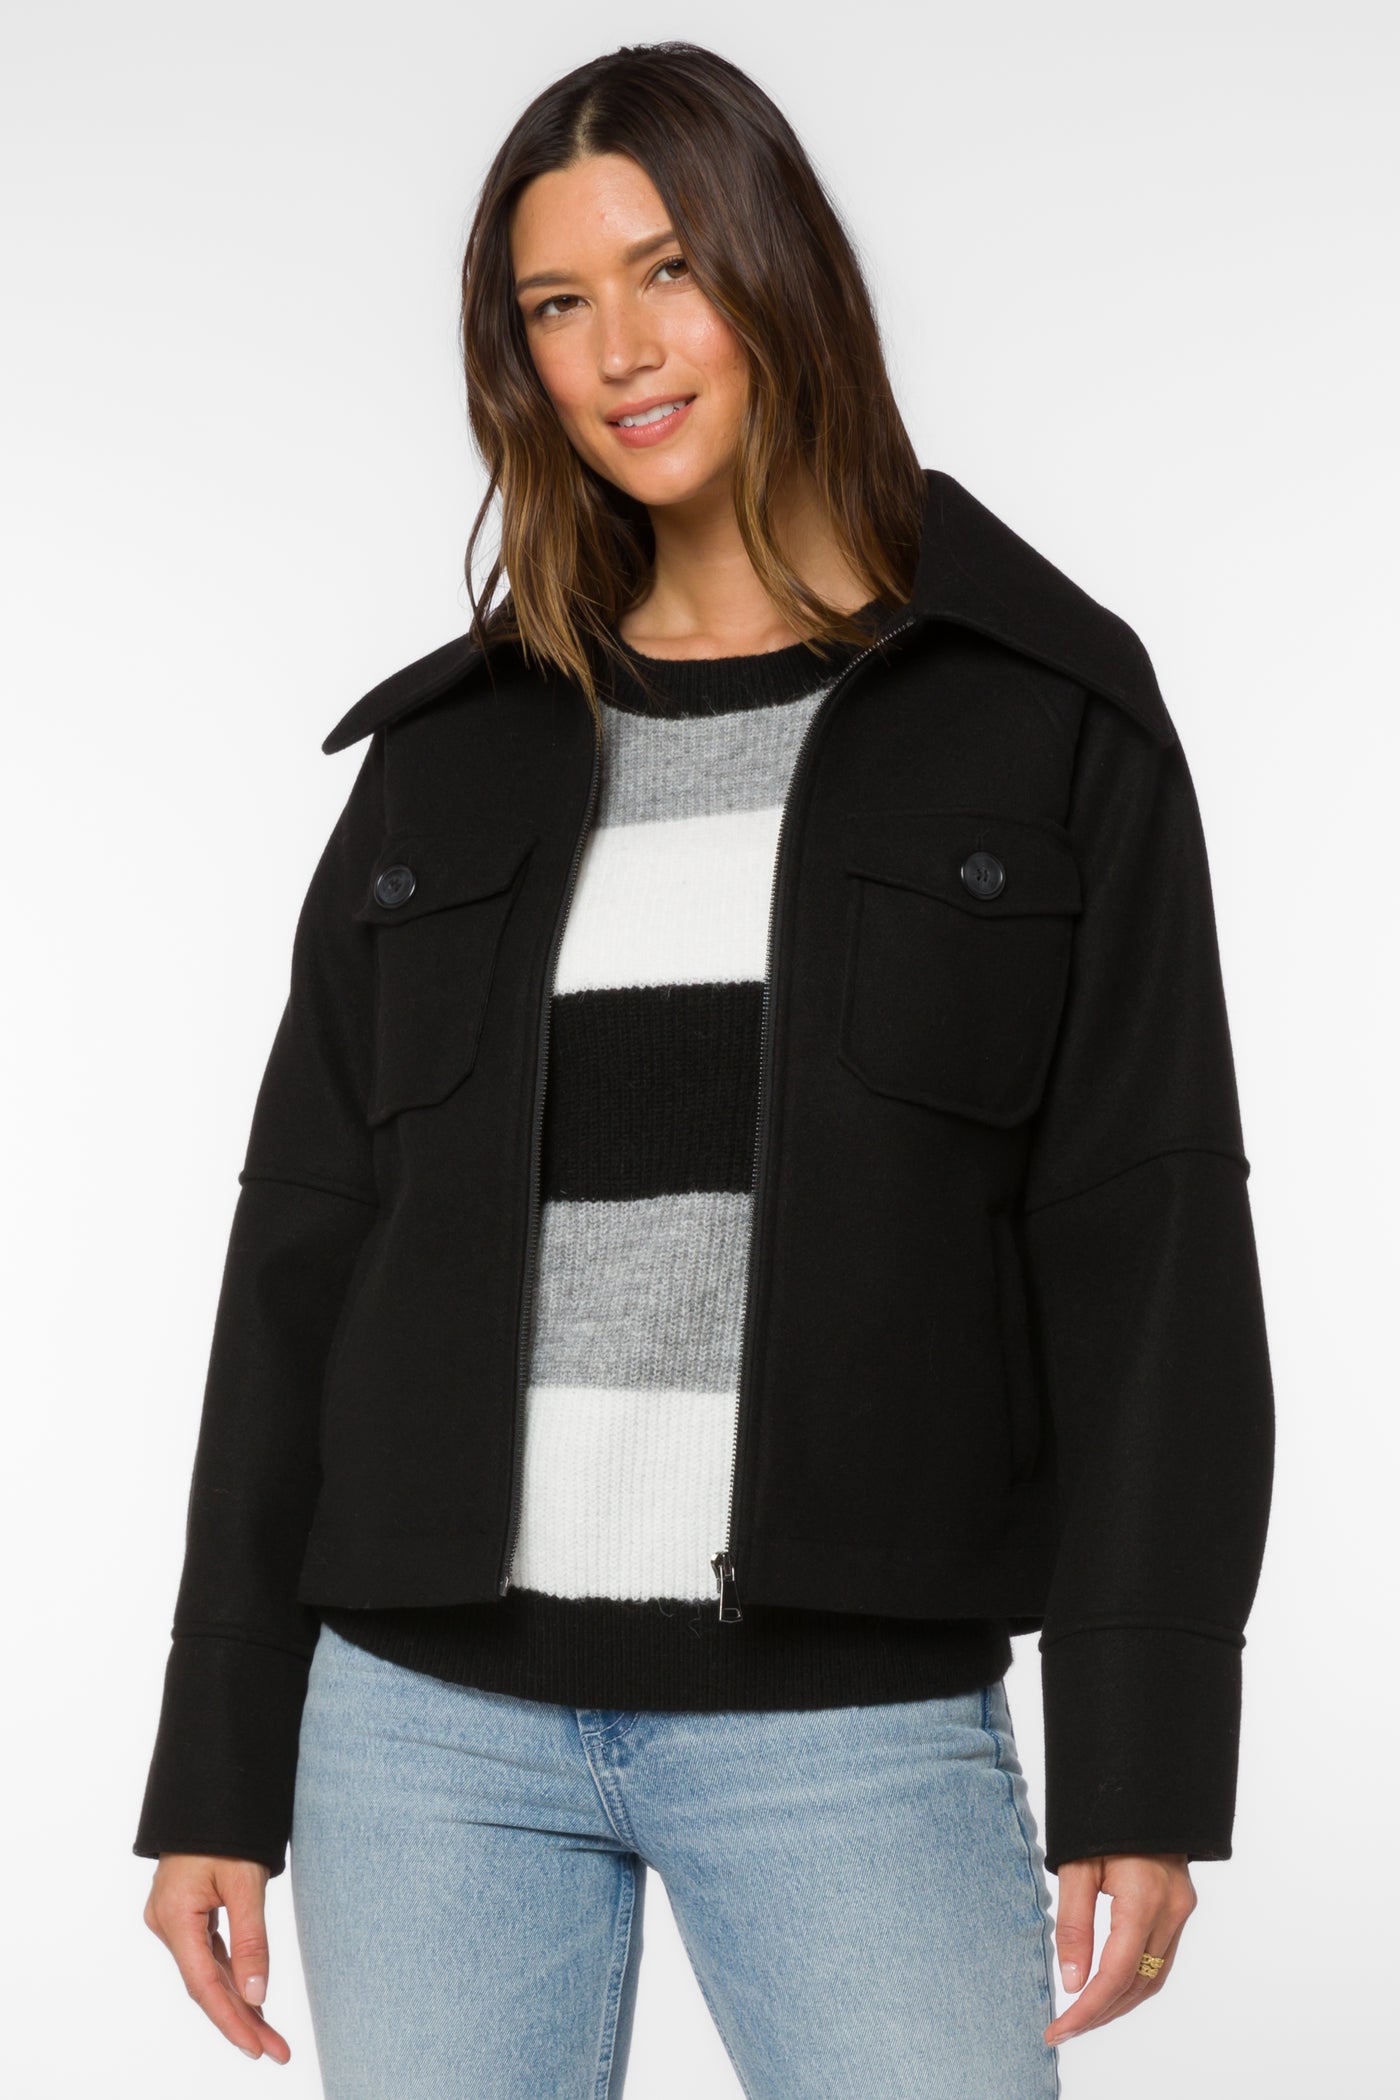 Stassi Black Jacket - Jackets & Outerwear - Velvet Heart Clothing